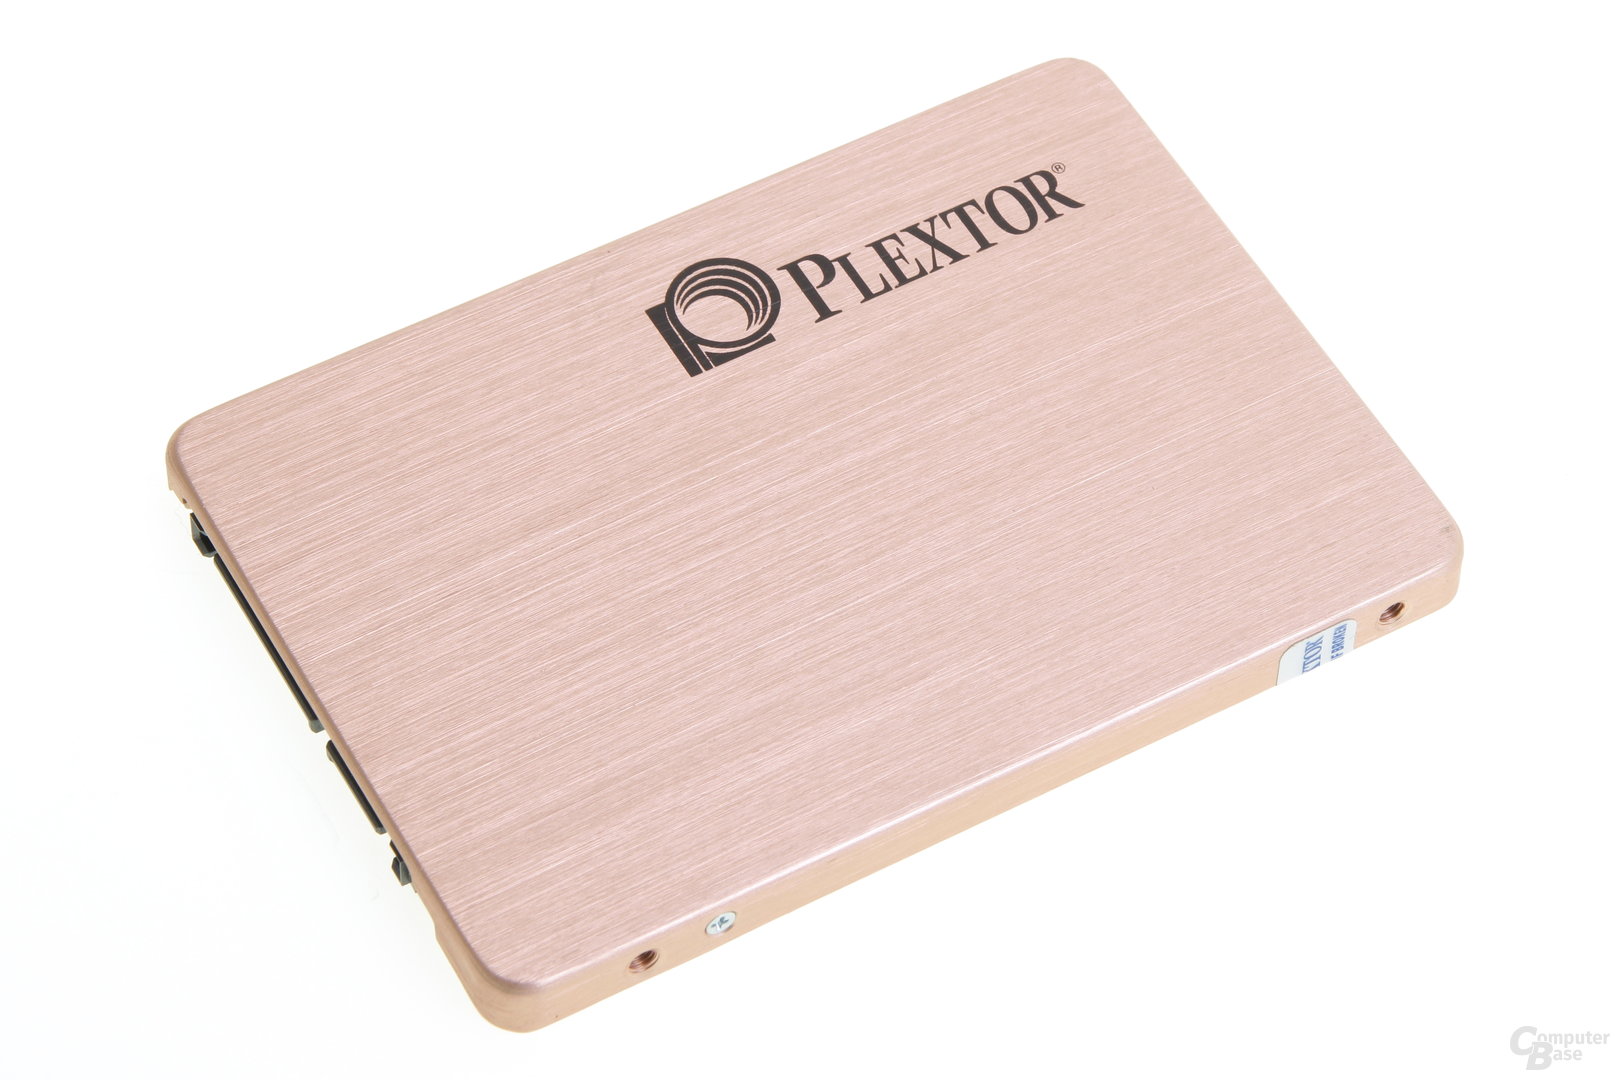 Plextor M6 Pro